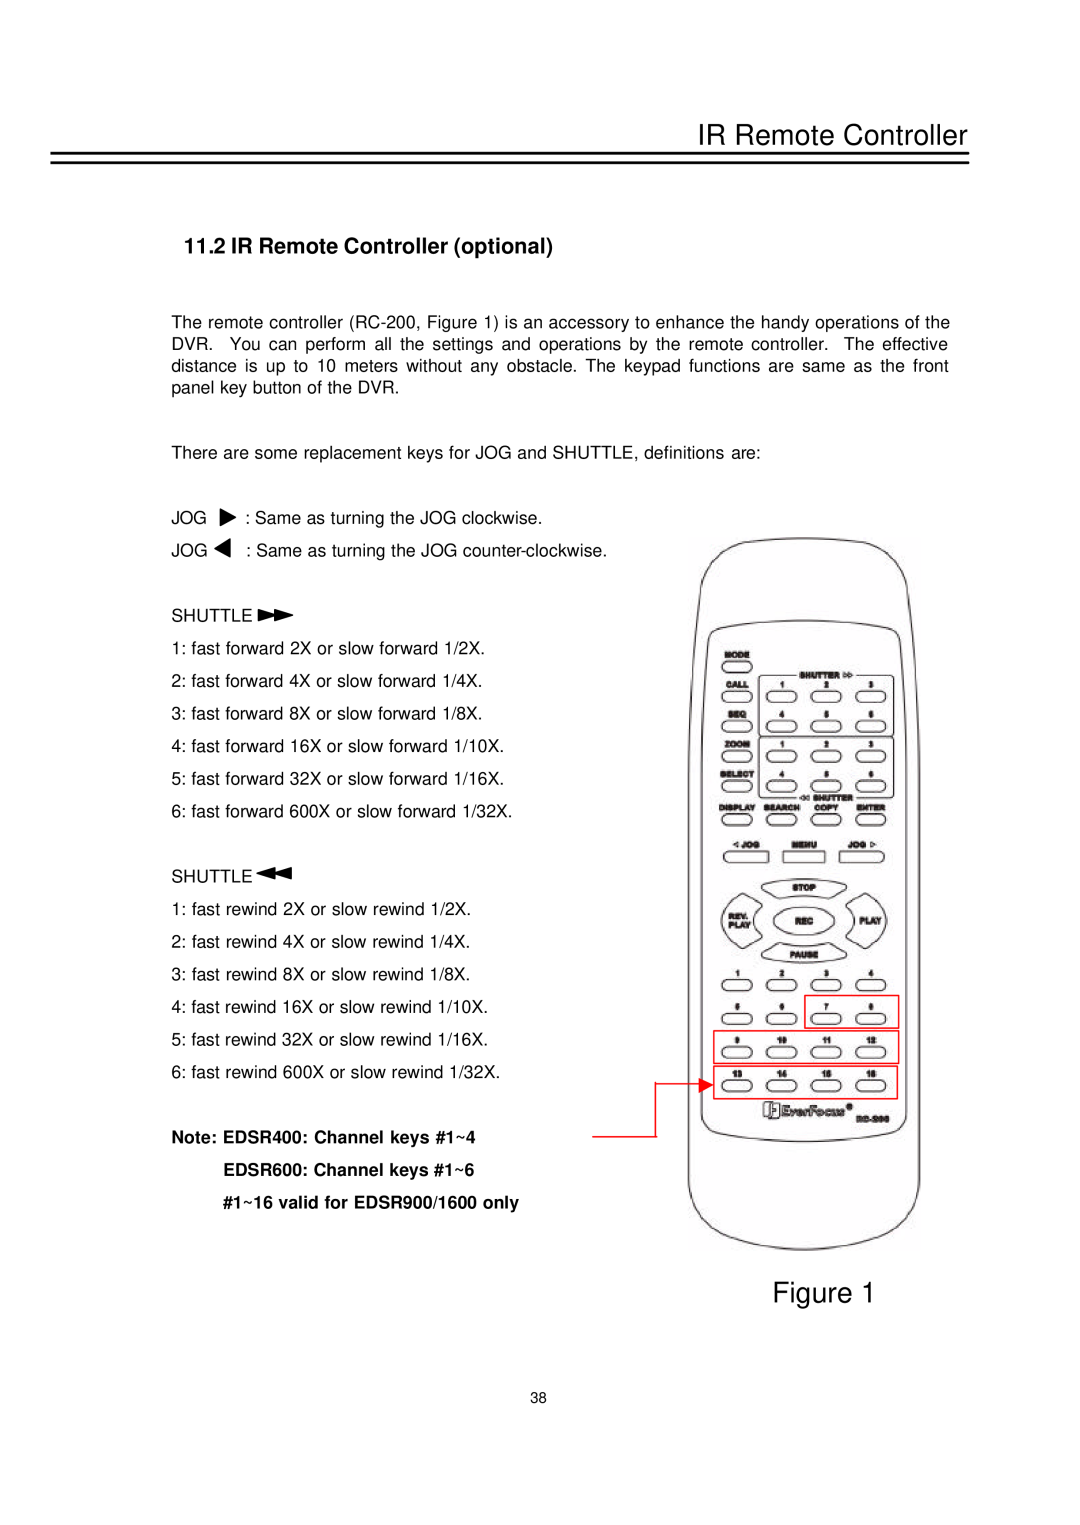 EverFocus EDSR-600, EDSR-400 IR Remote Controller optional, Note EDSR400 Channel keys #1~4 EDSR600 Channel keys #1~6 